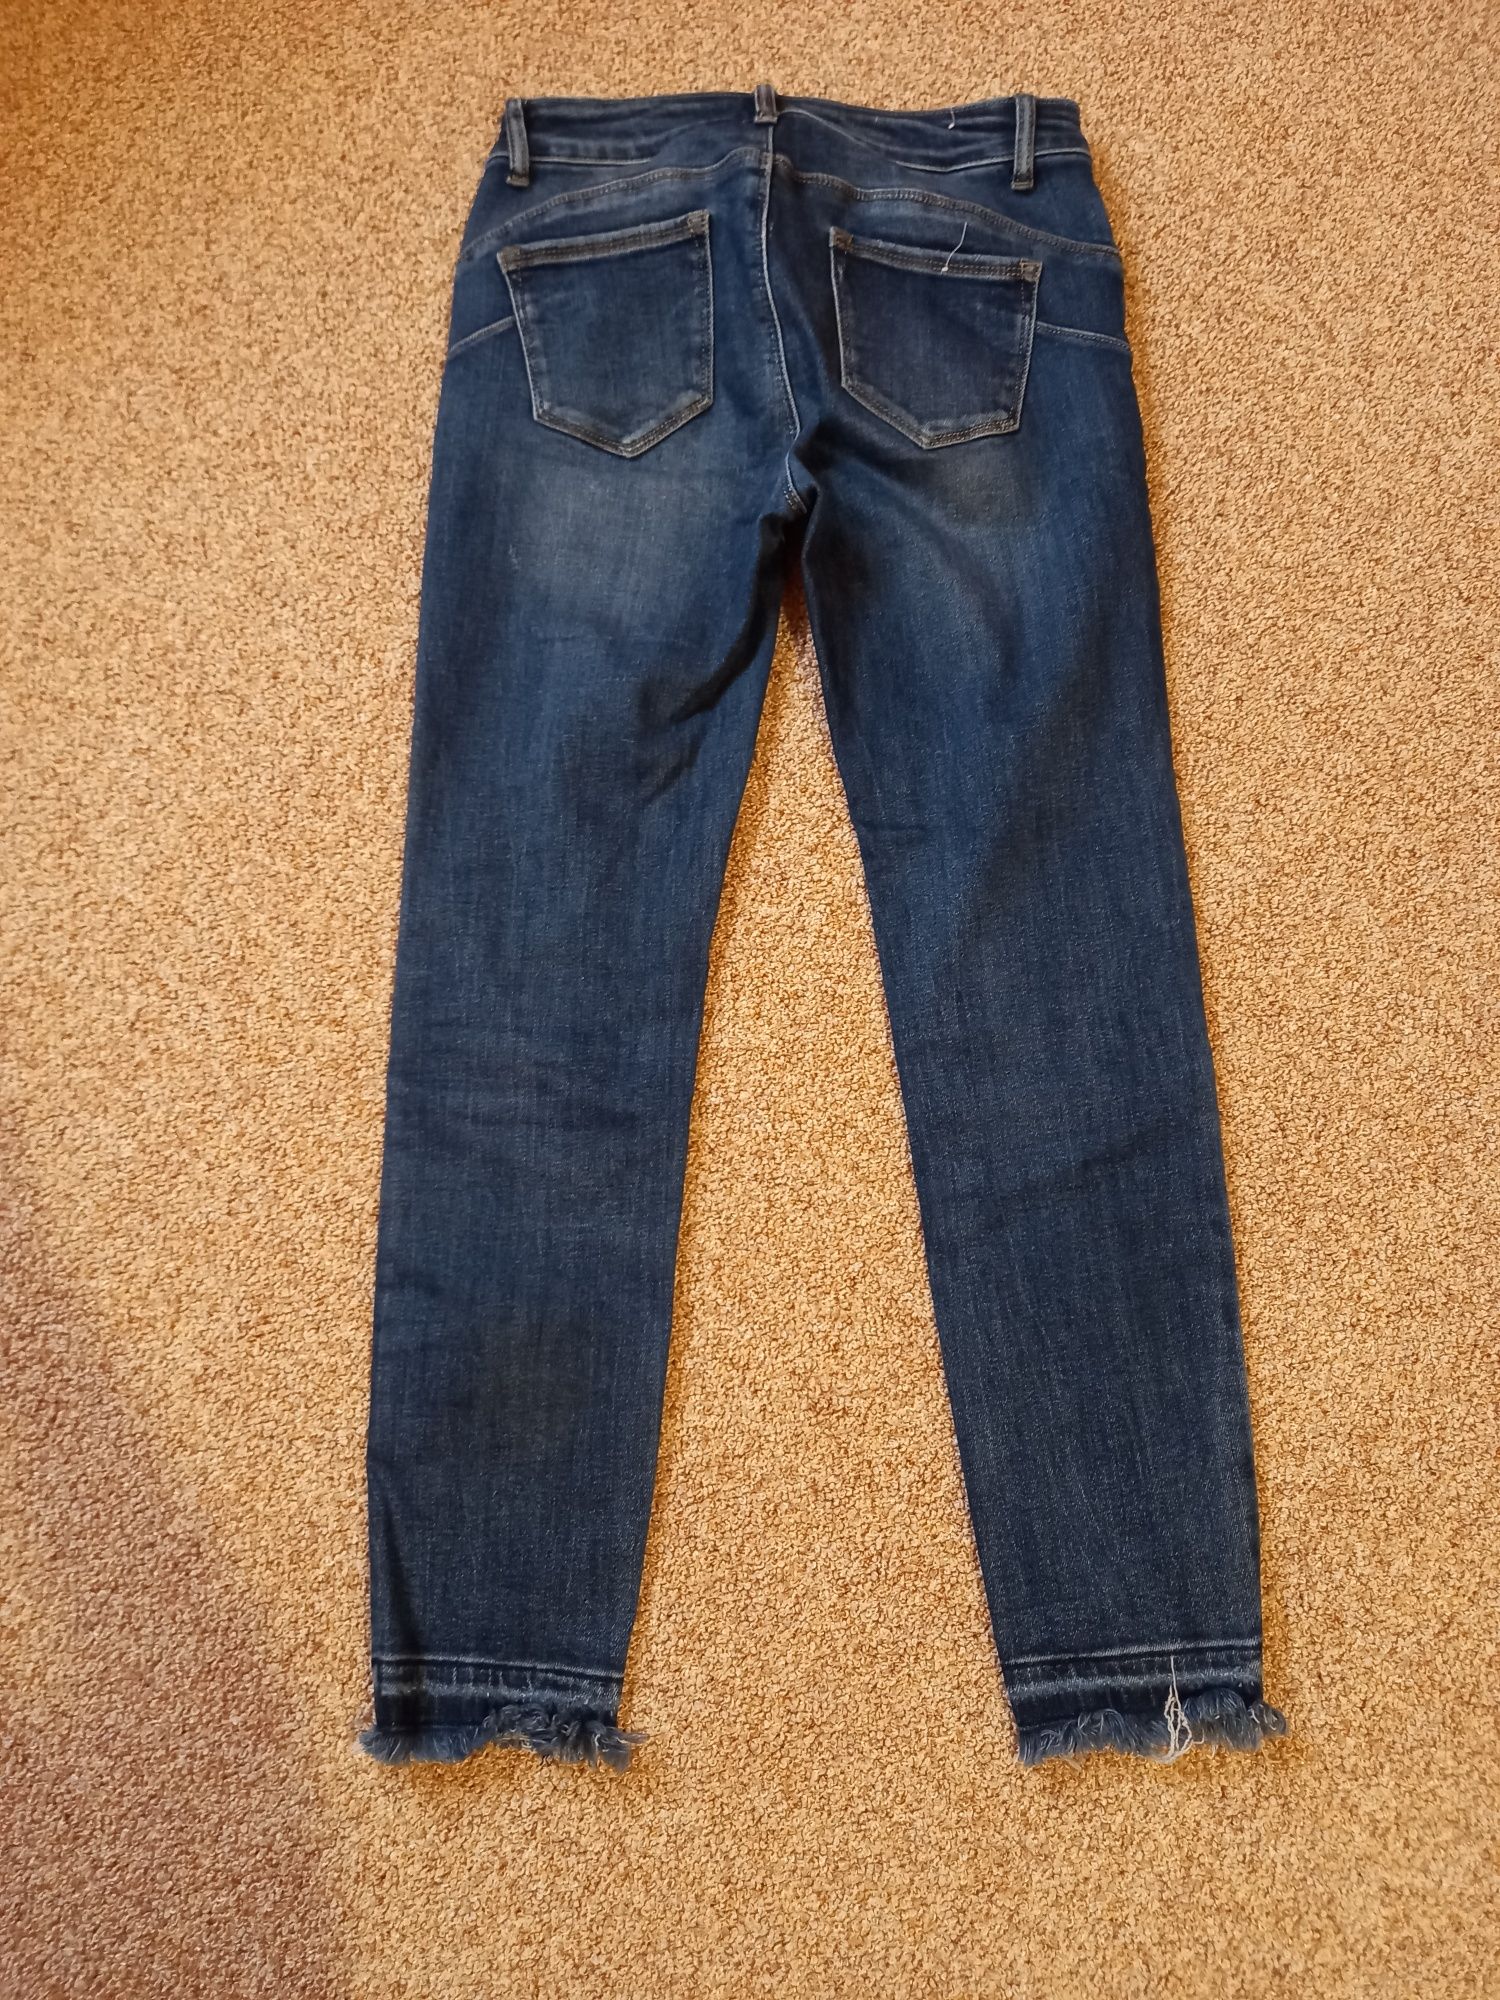 Spodnie jeans r.29 re-dress